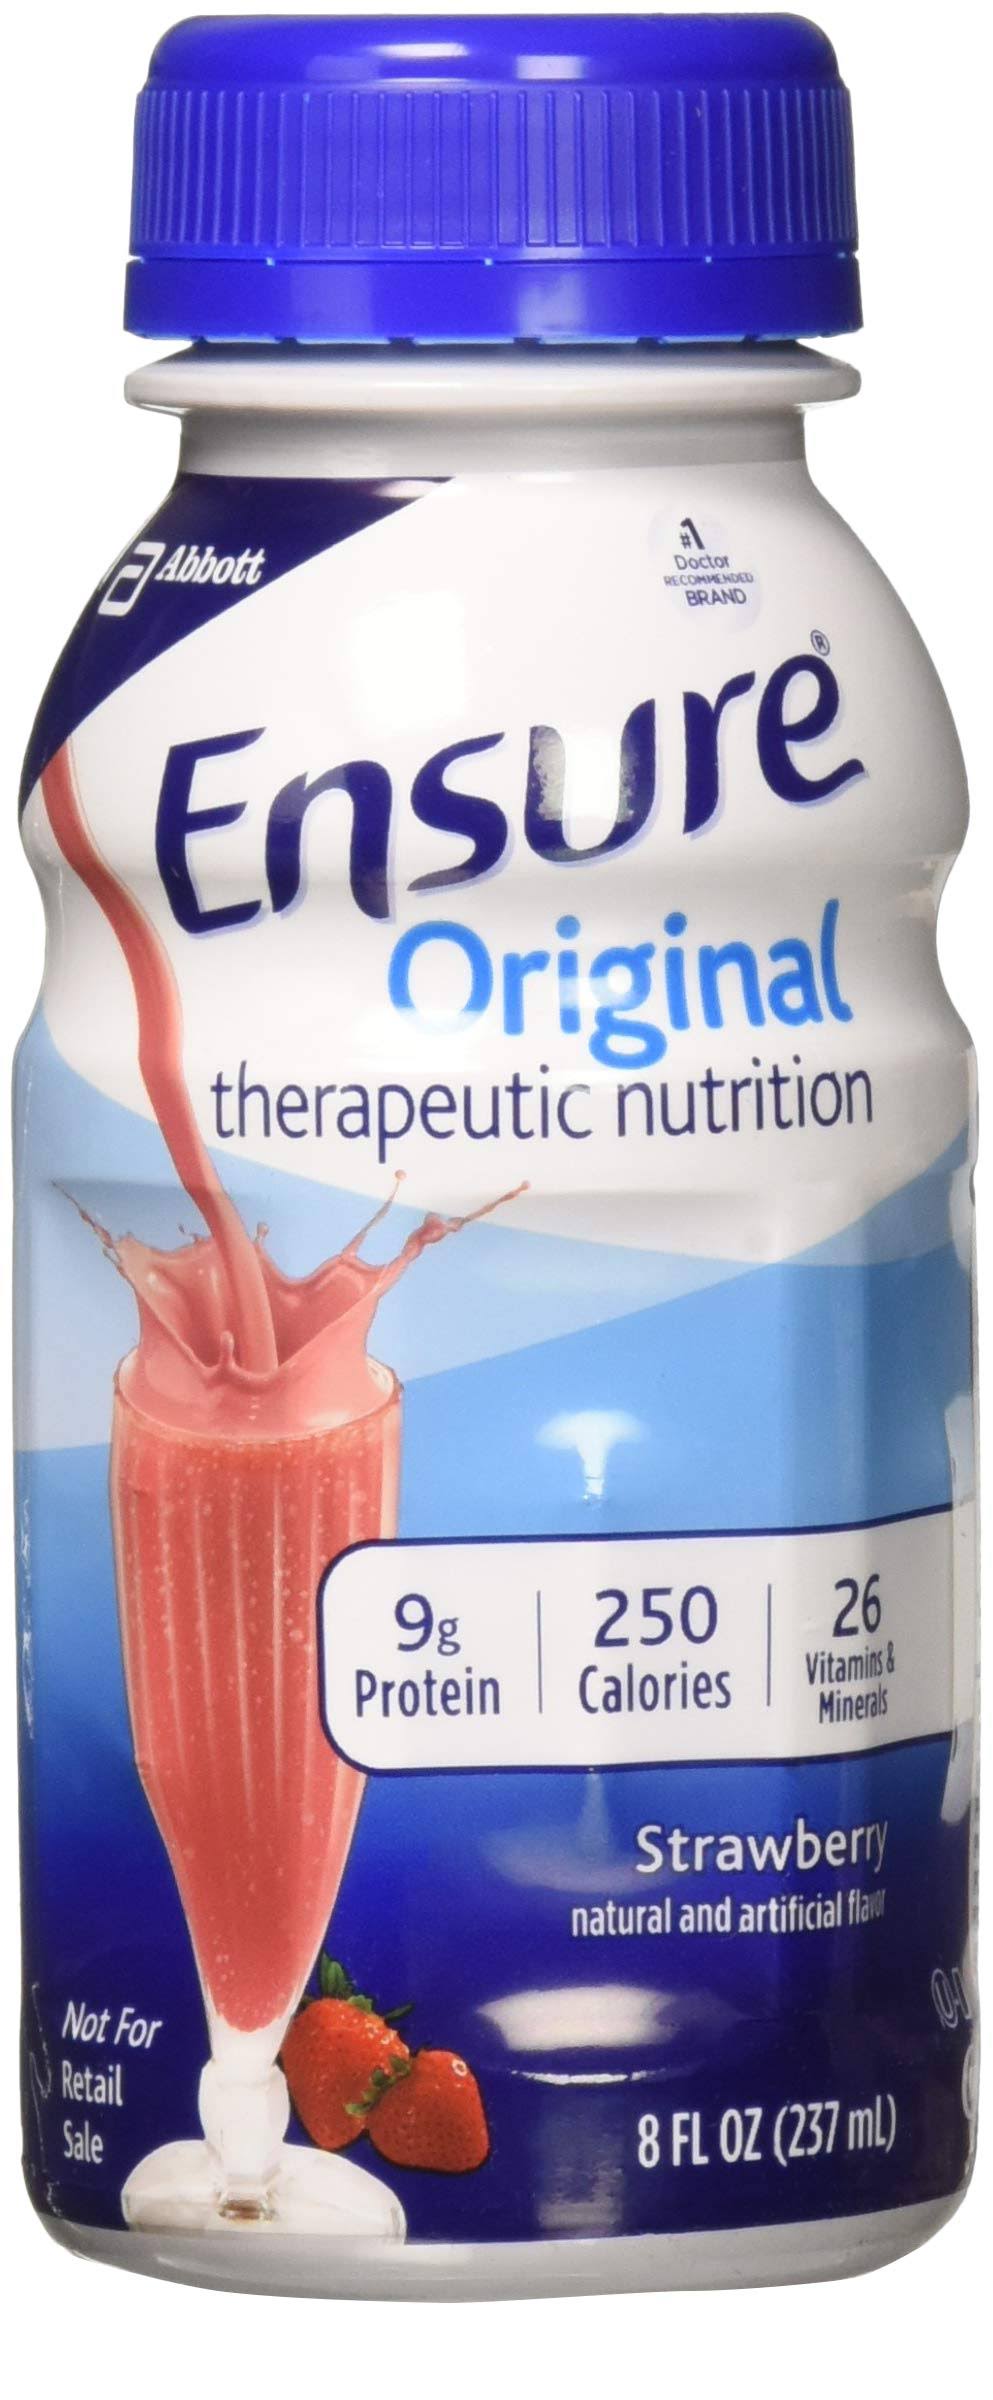 Ensure Oral Supplement Original Therapeutic Nutrition Strawberry, 8 oz